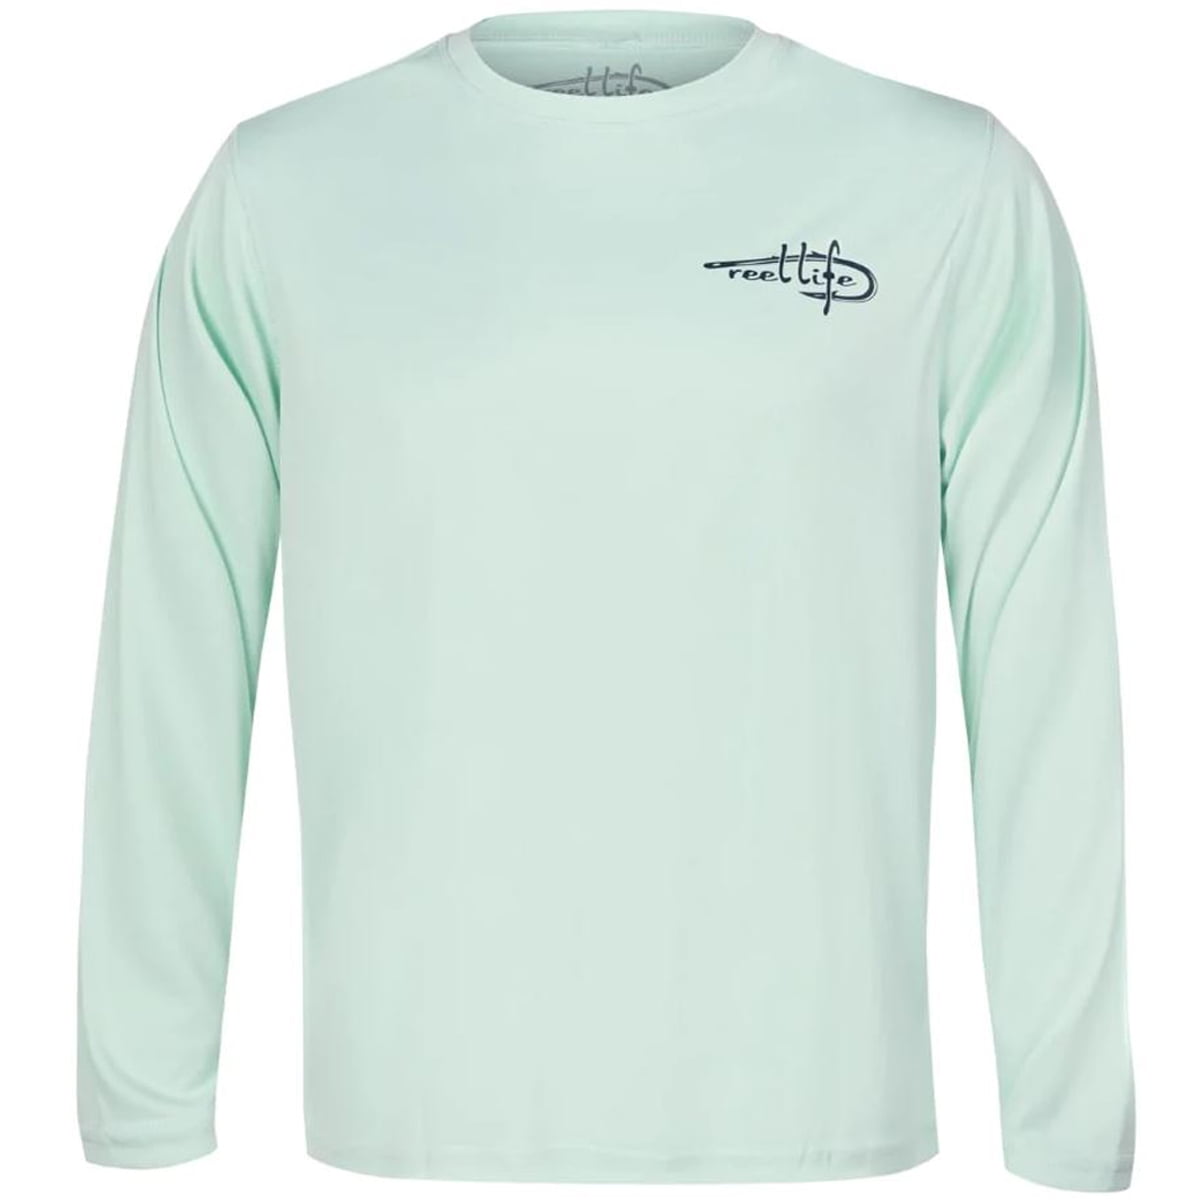 Reel Life Color Splash Sail UV Long Sleeve T-Shirt - Large - Misty Jade 